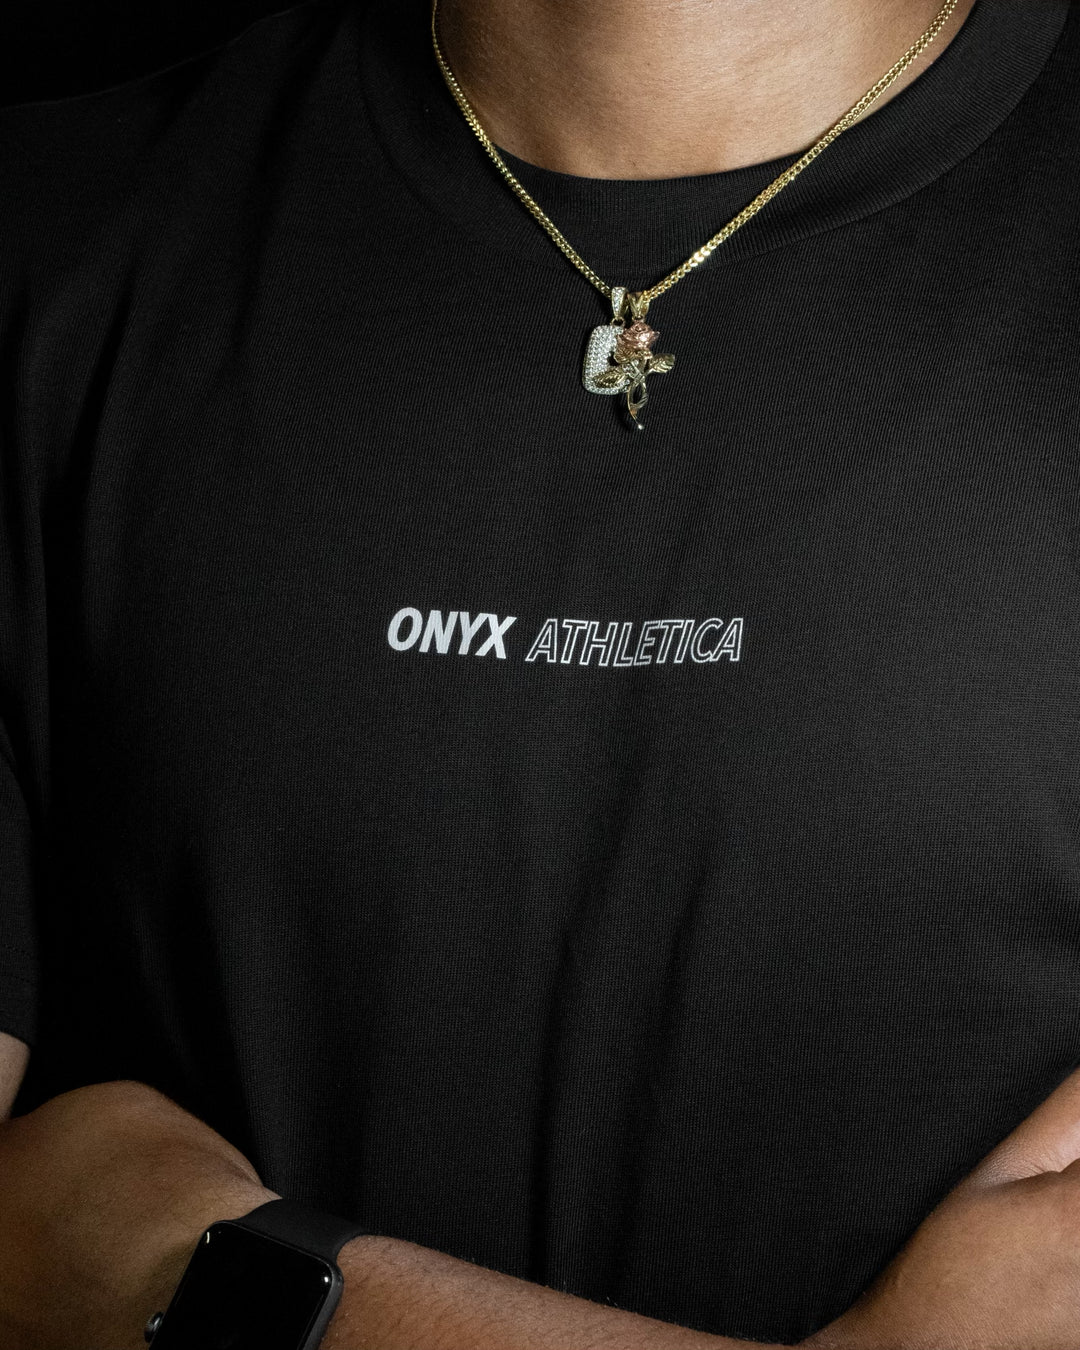 Onyx Athletica